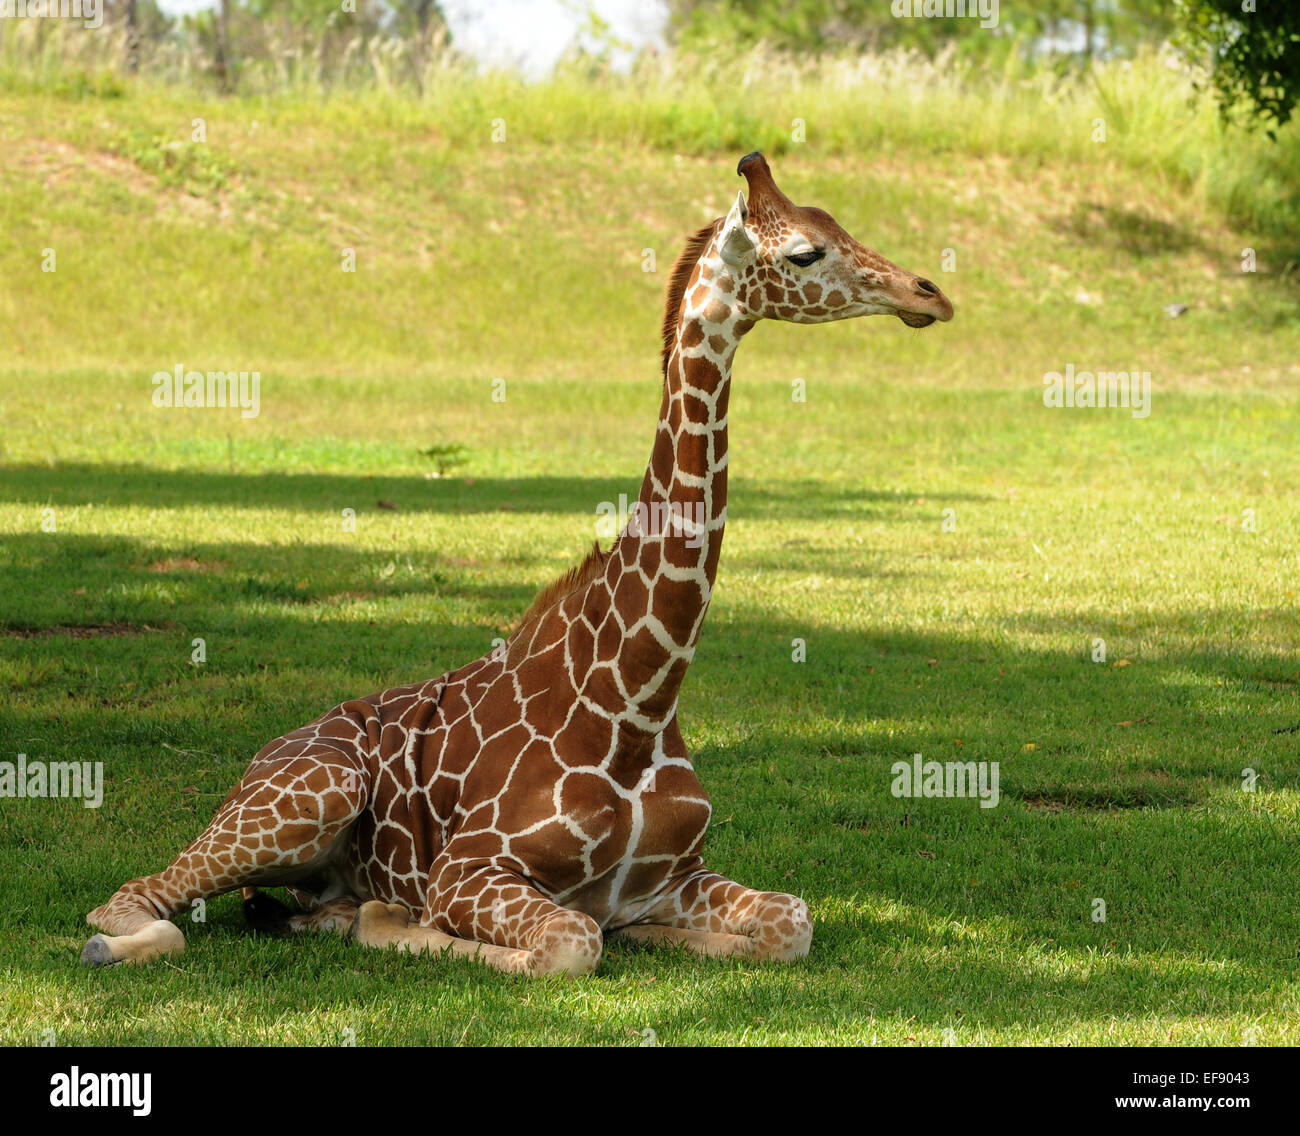 Jeune girafe repose au sol dans l'habitat naturel Banque D'Images